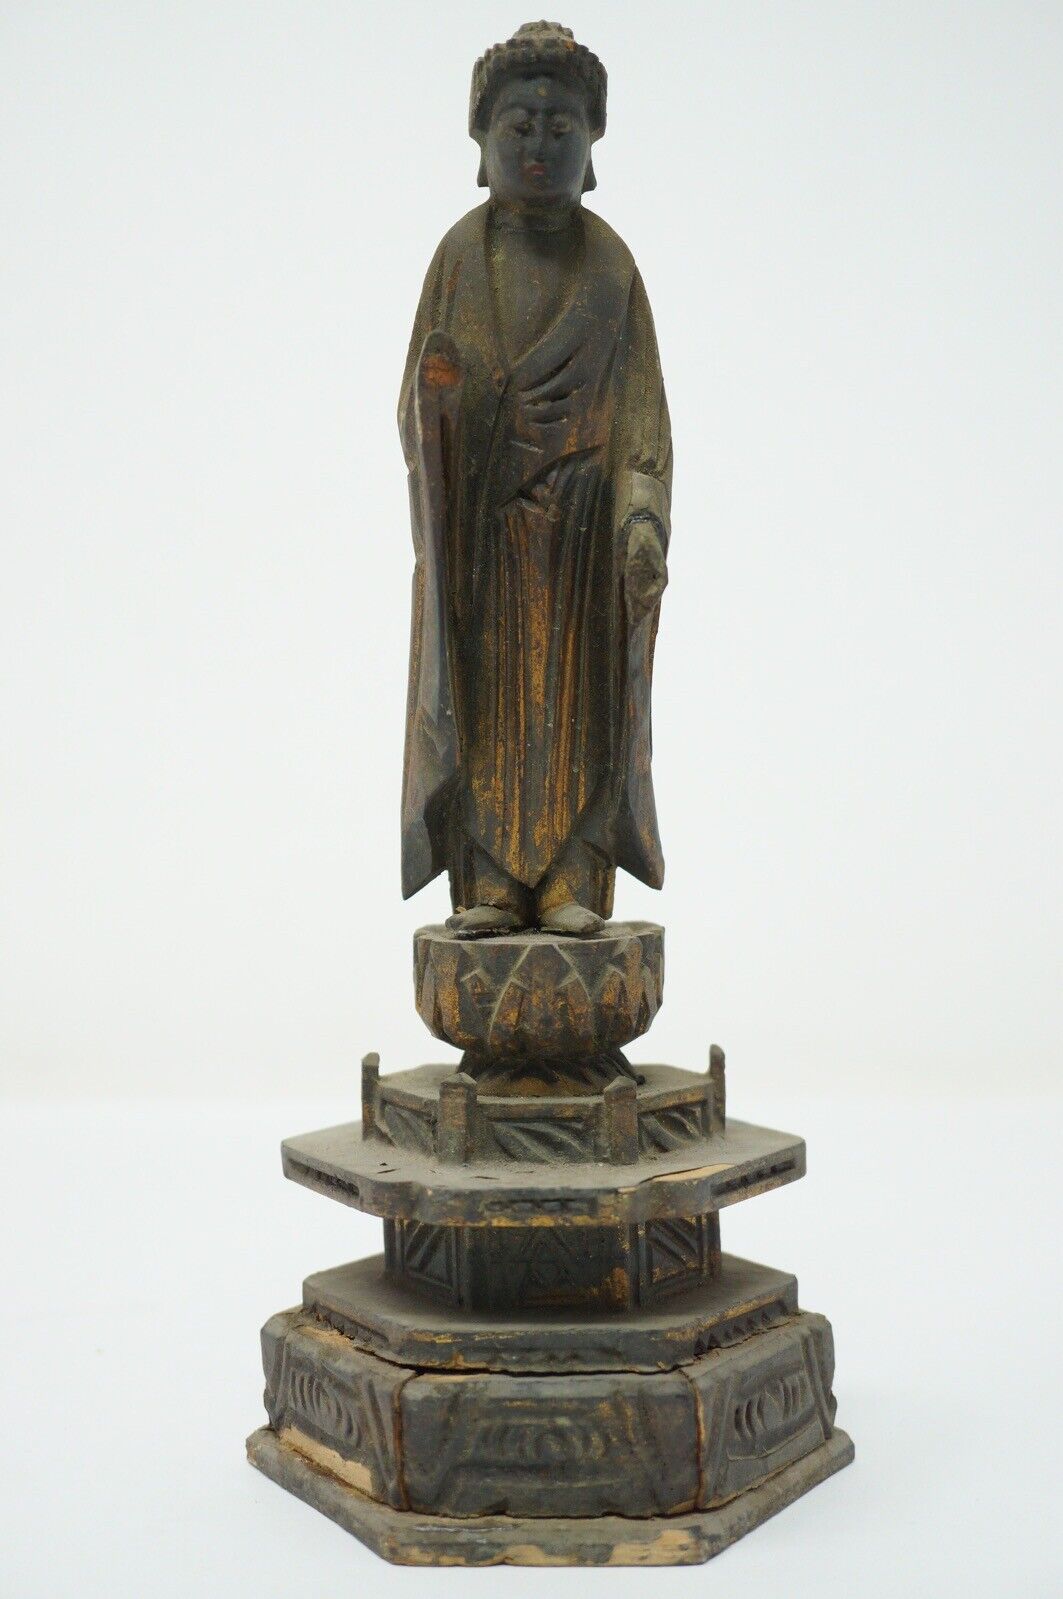 Japanese Buddha Figure Antique Wooden Buddha Original from Japan 0430E4